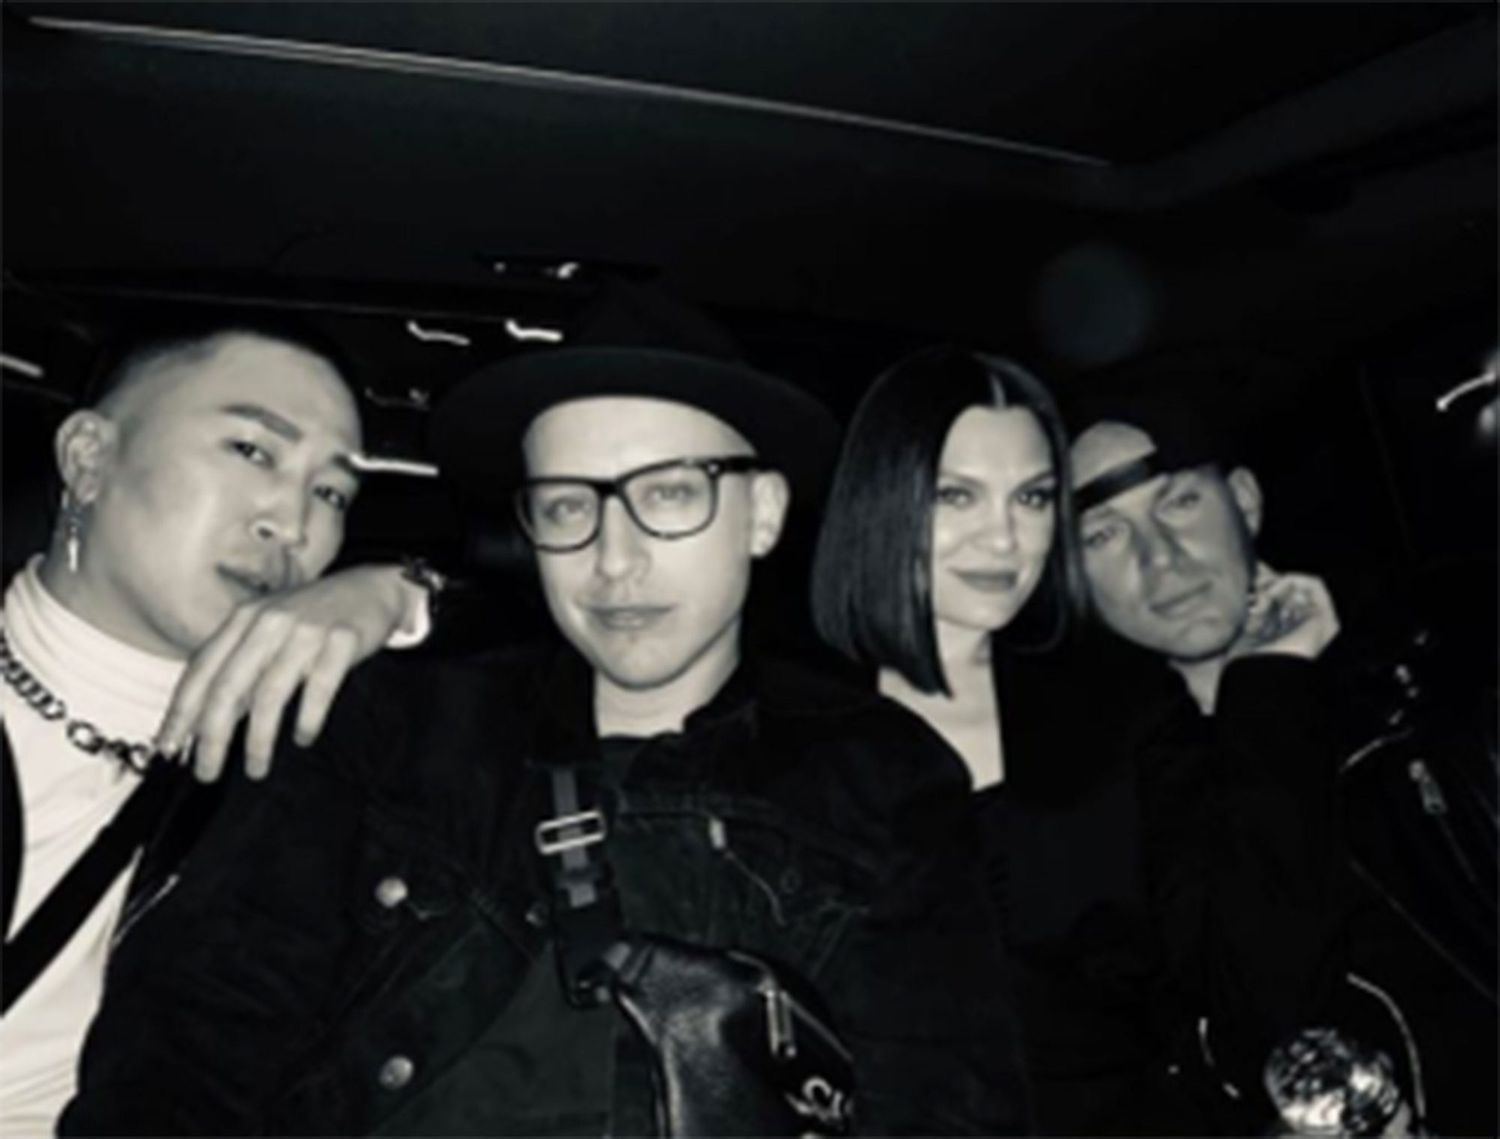 Channing Tatum Jessie J date nightCredit: Jessie J/Instagram